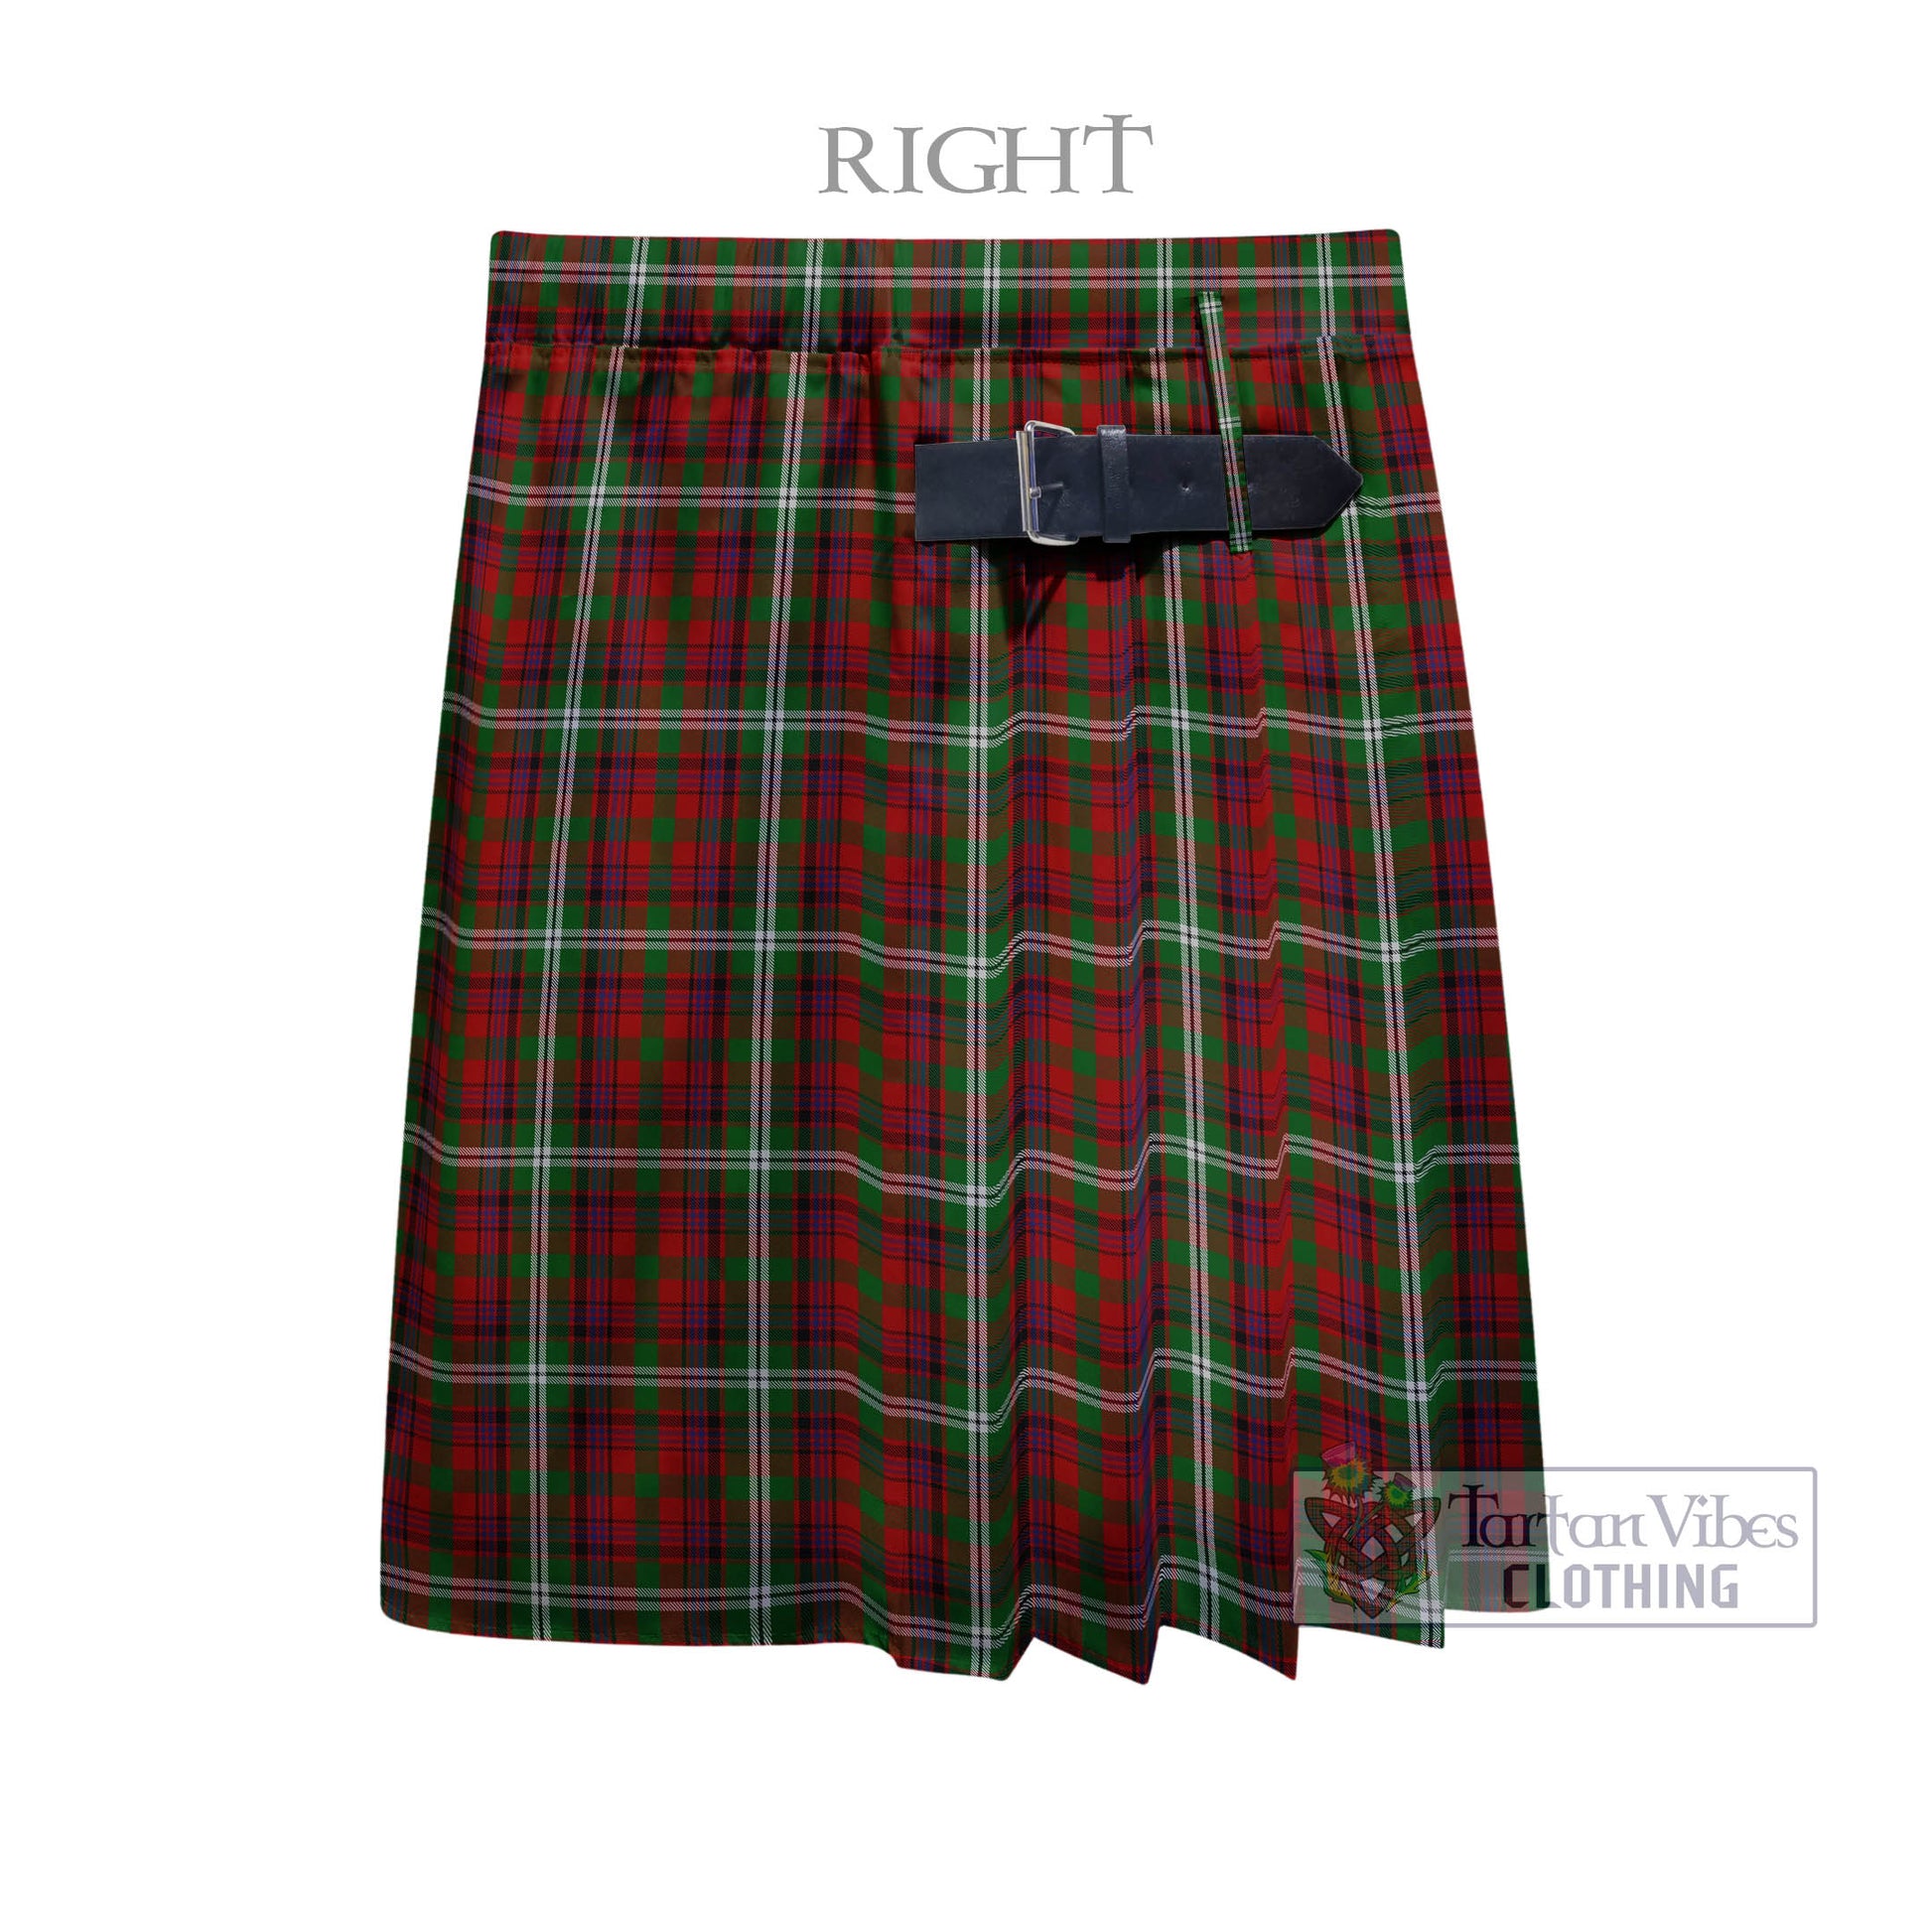 Tartan Vibes Clothing Maguire Tartan Men's Pleated Skirt - Fashion Casual Retro Scottish Style